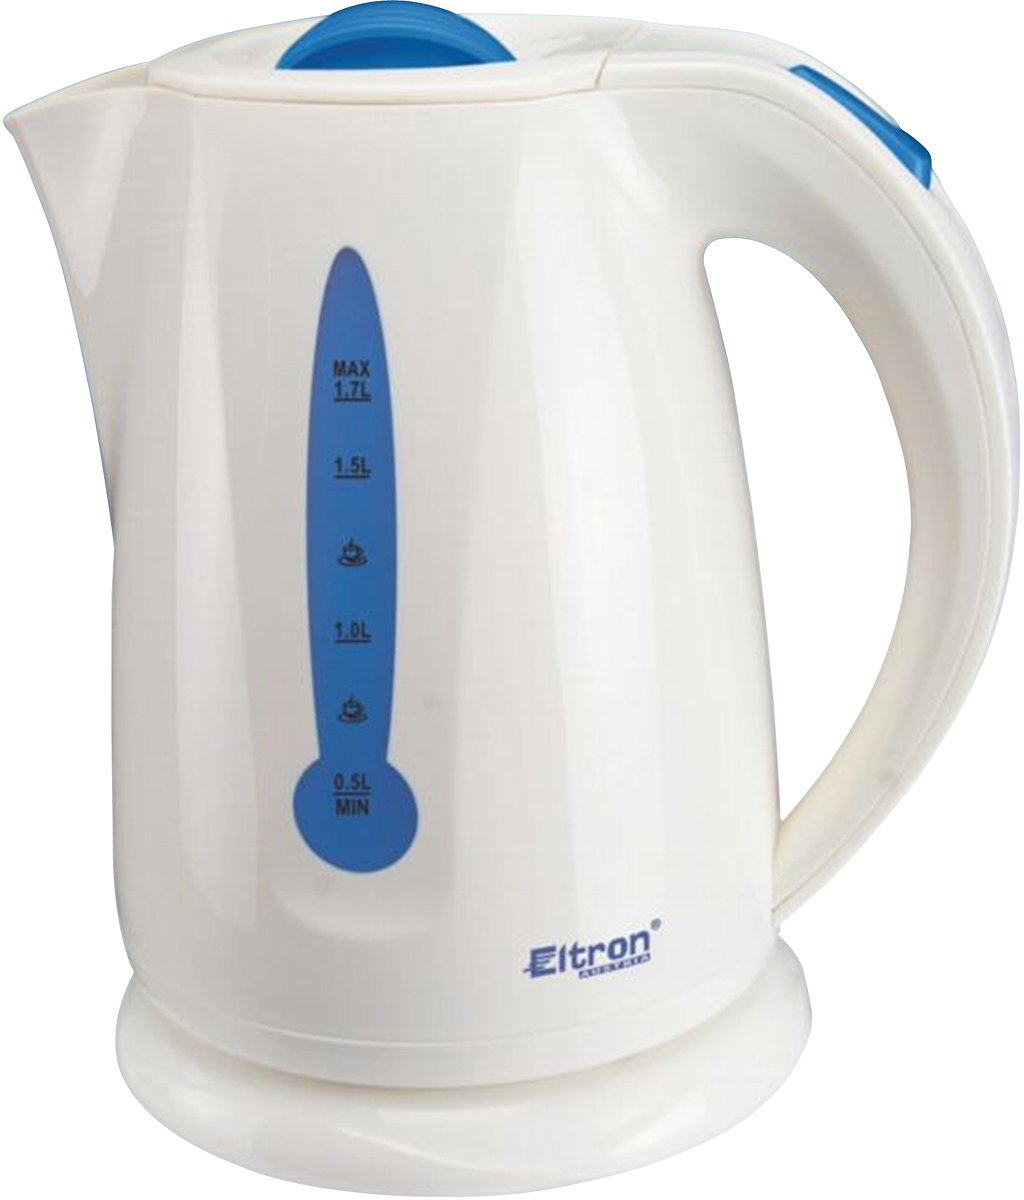 Eltron 6678, White электрический чайник